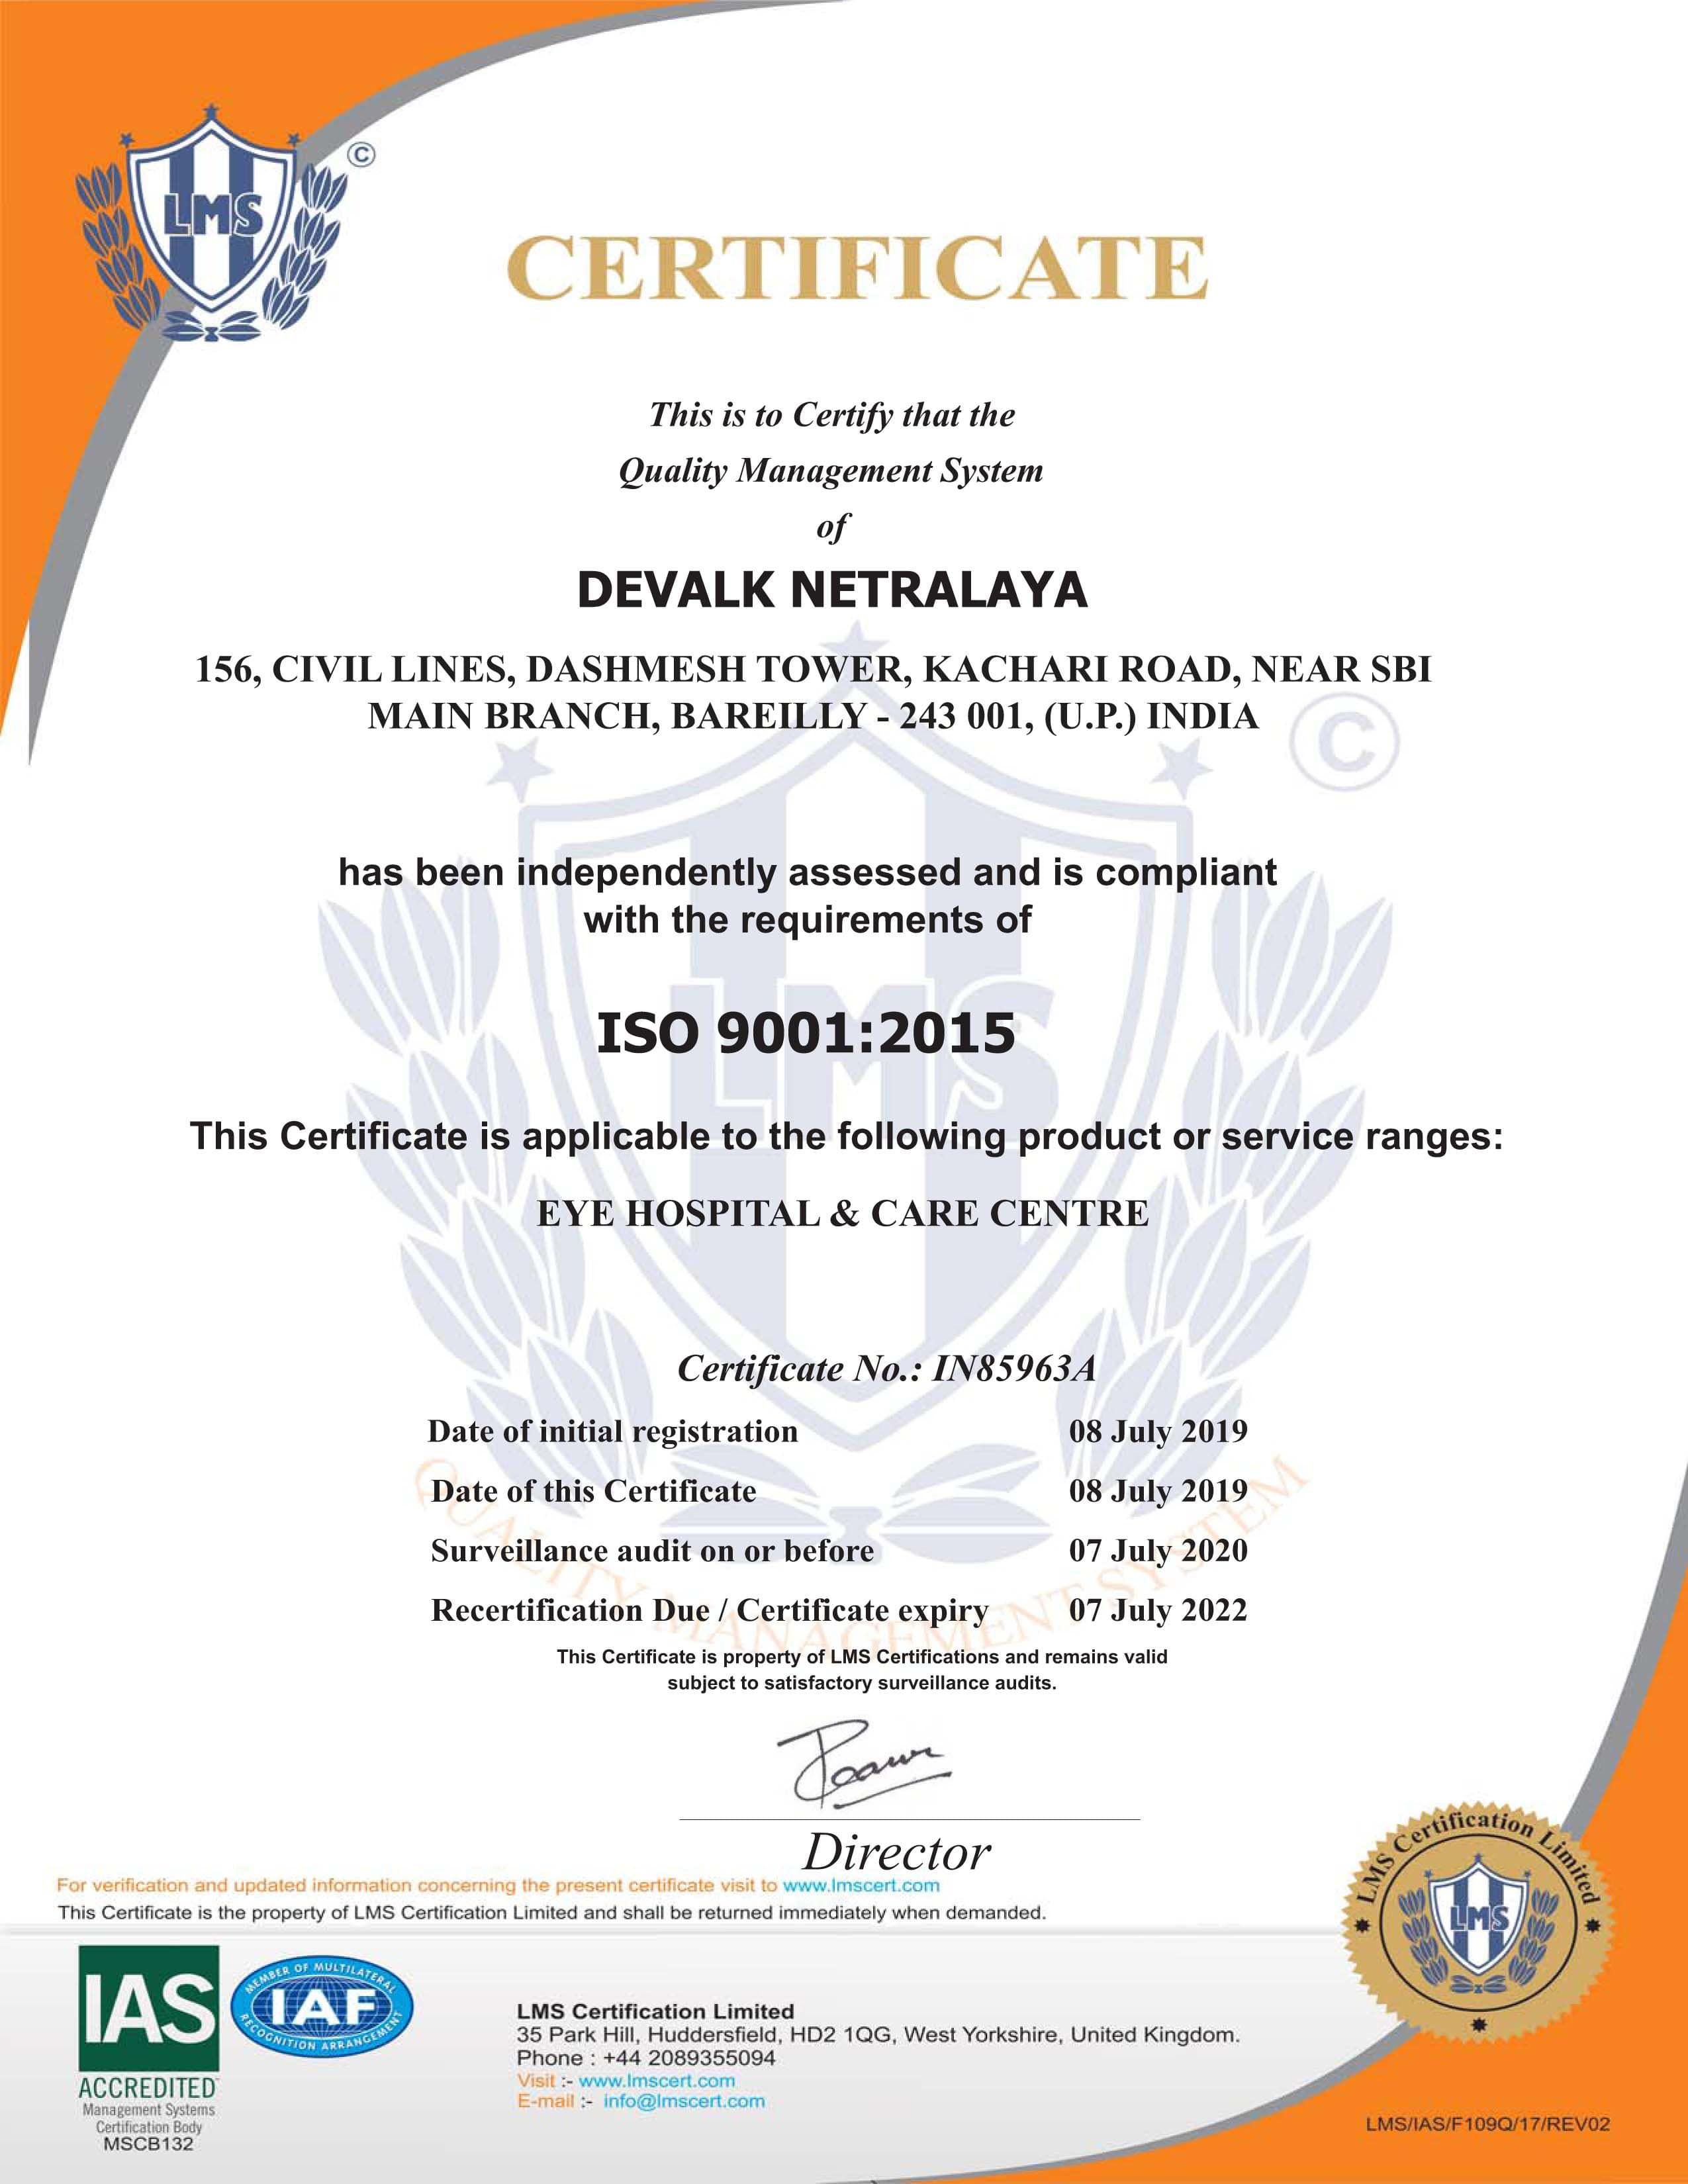 Devalk Netralaya Certificate